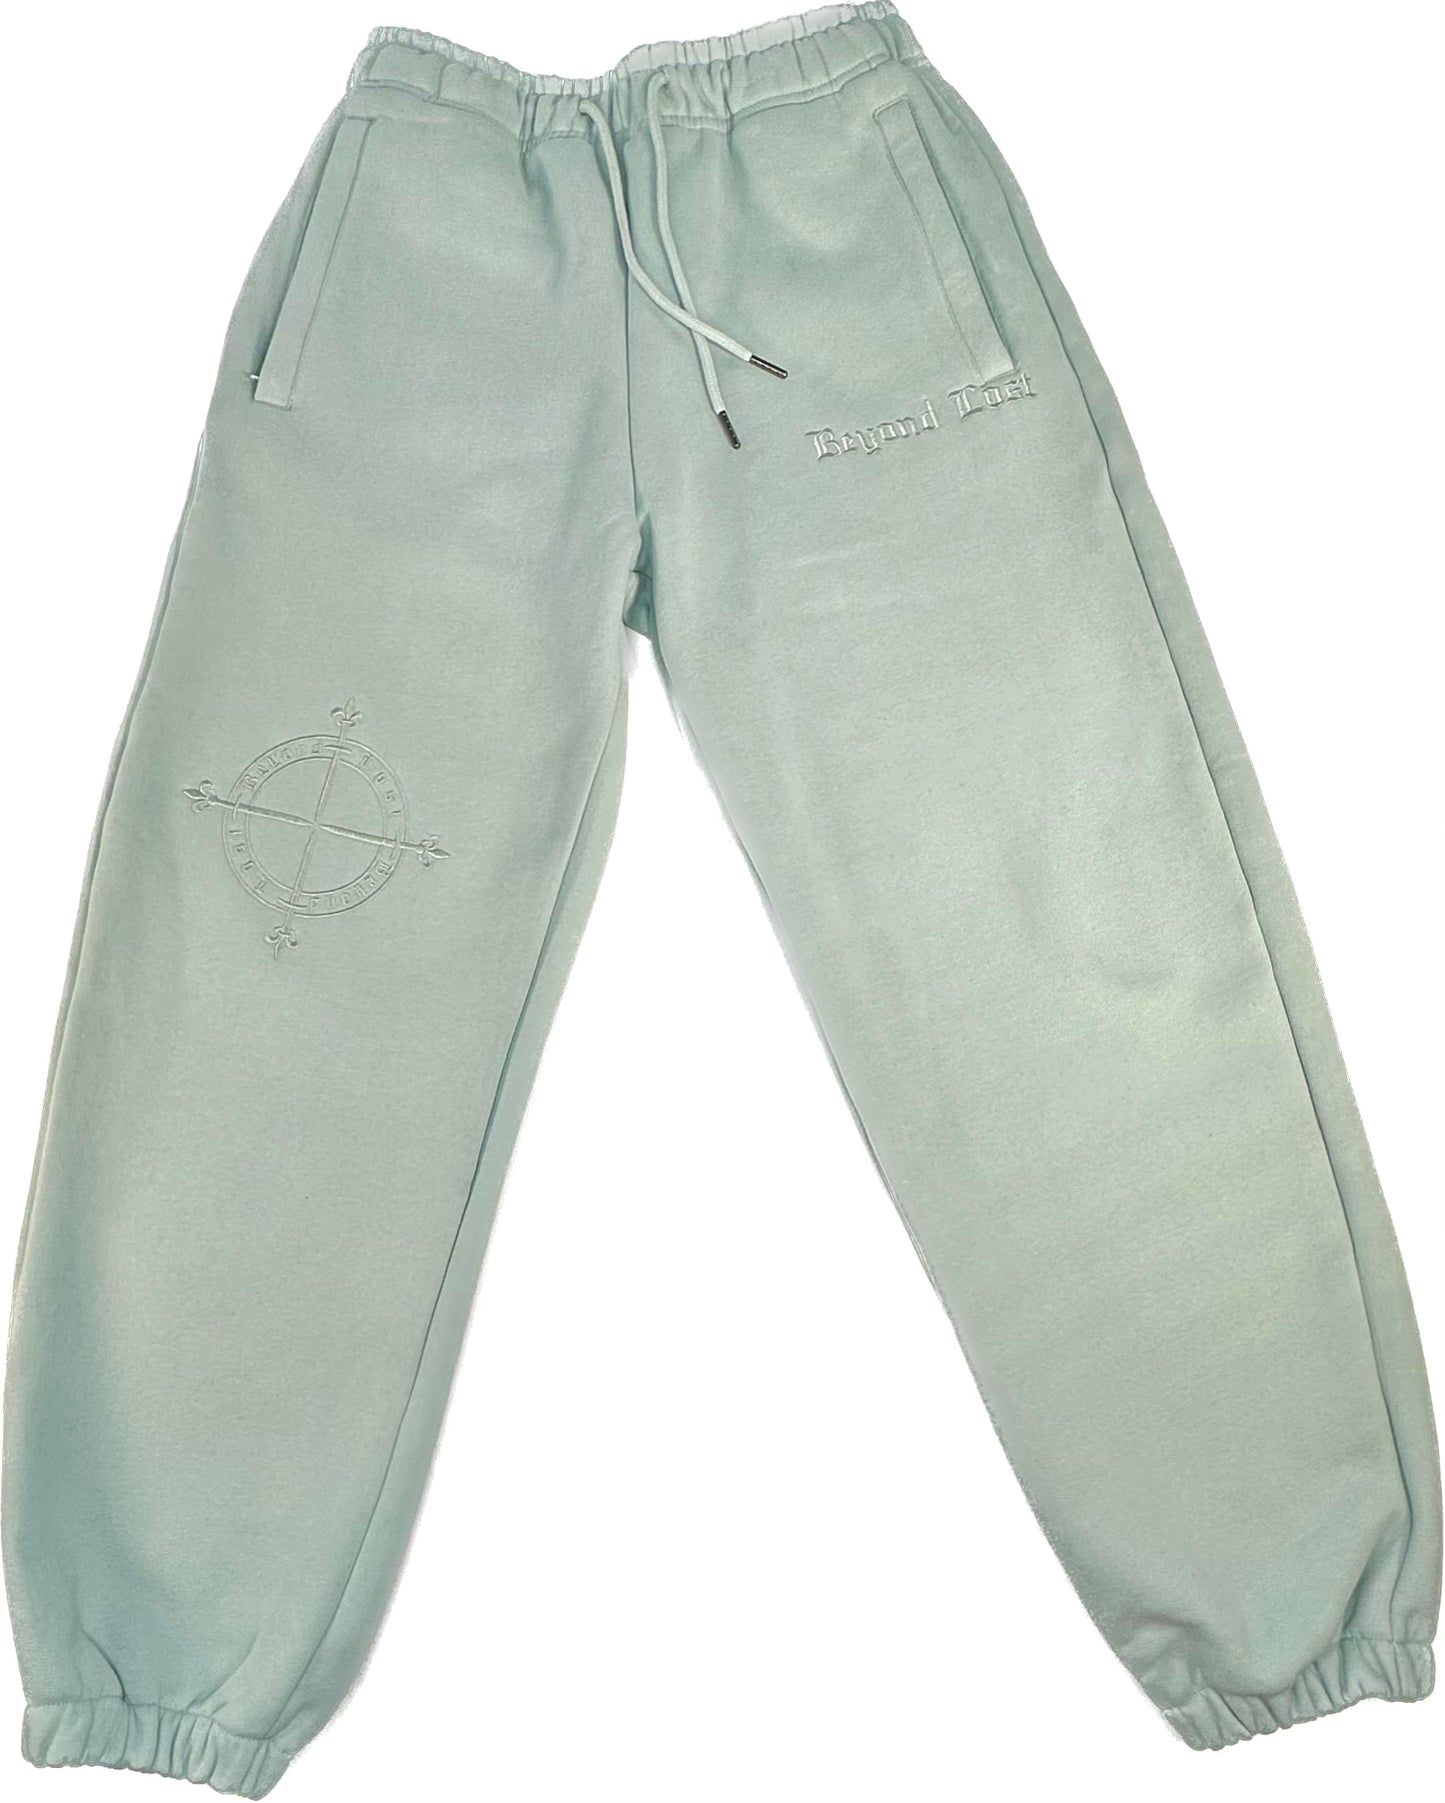 Blue Ocean Mist Sweatpants: Blue Monochrome Embroidery   3 Zip pockets